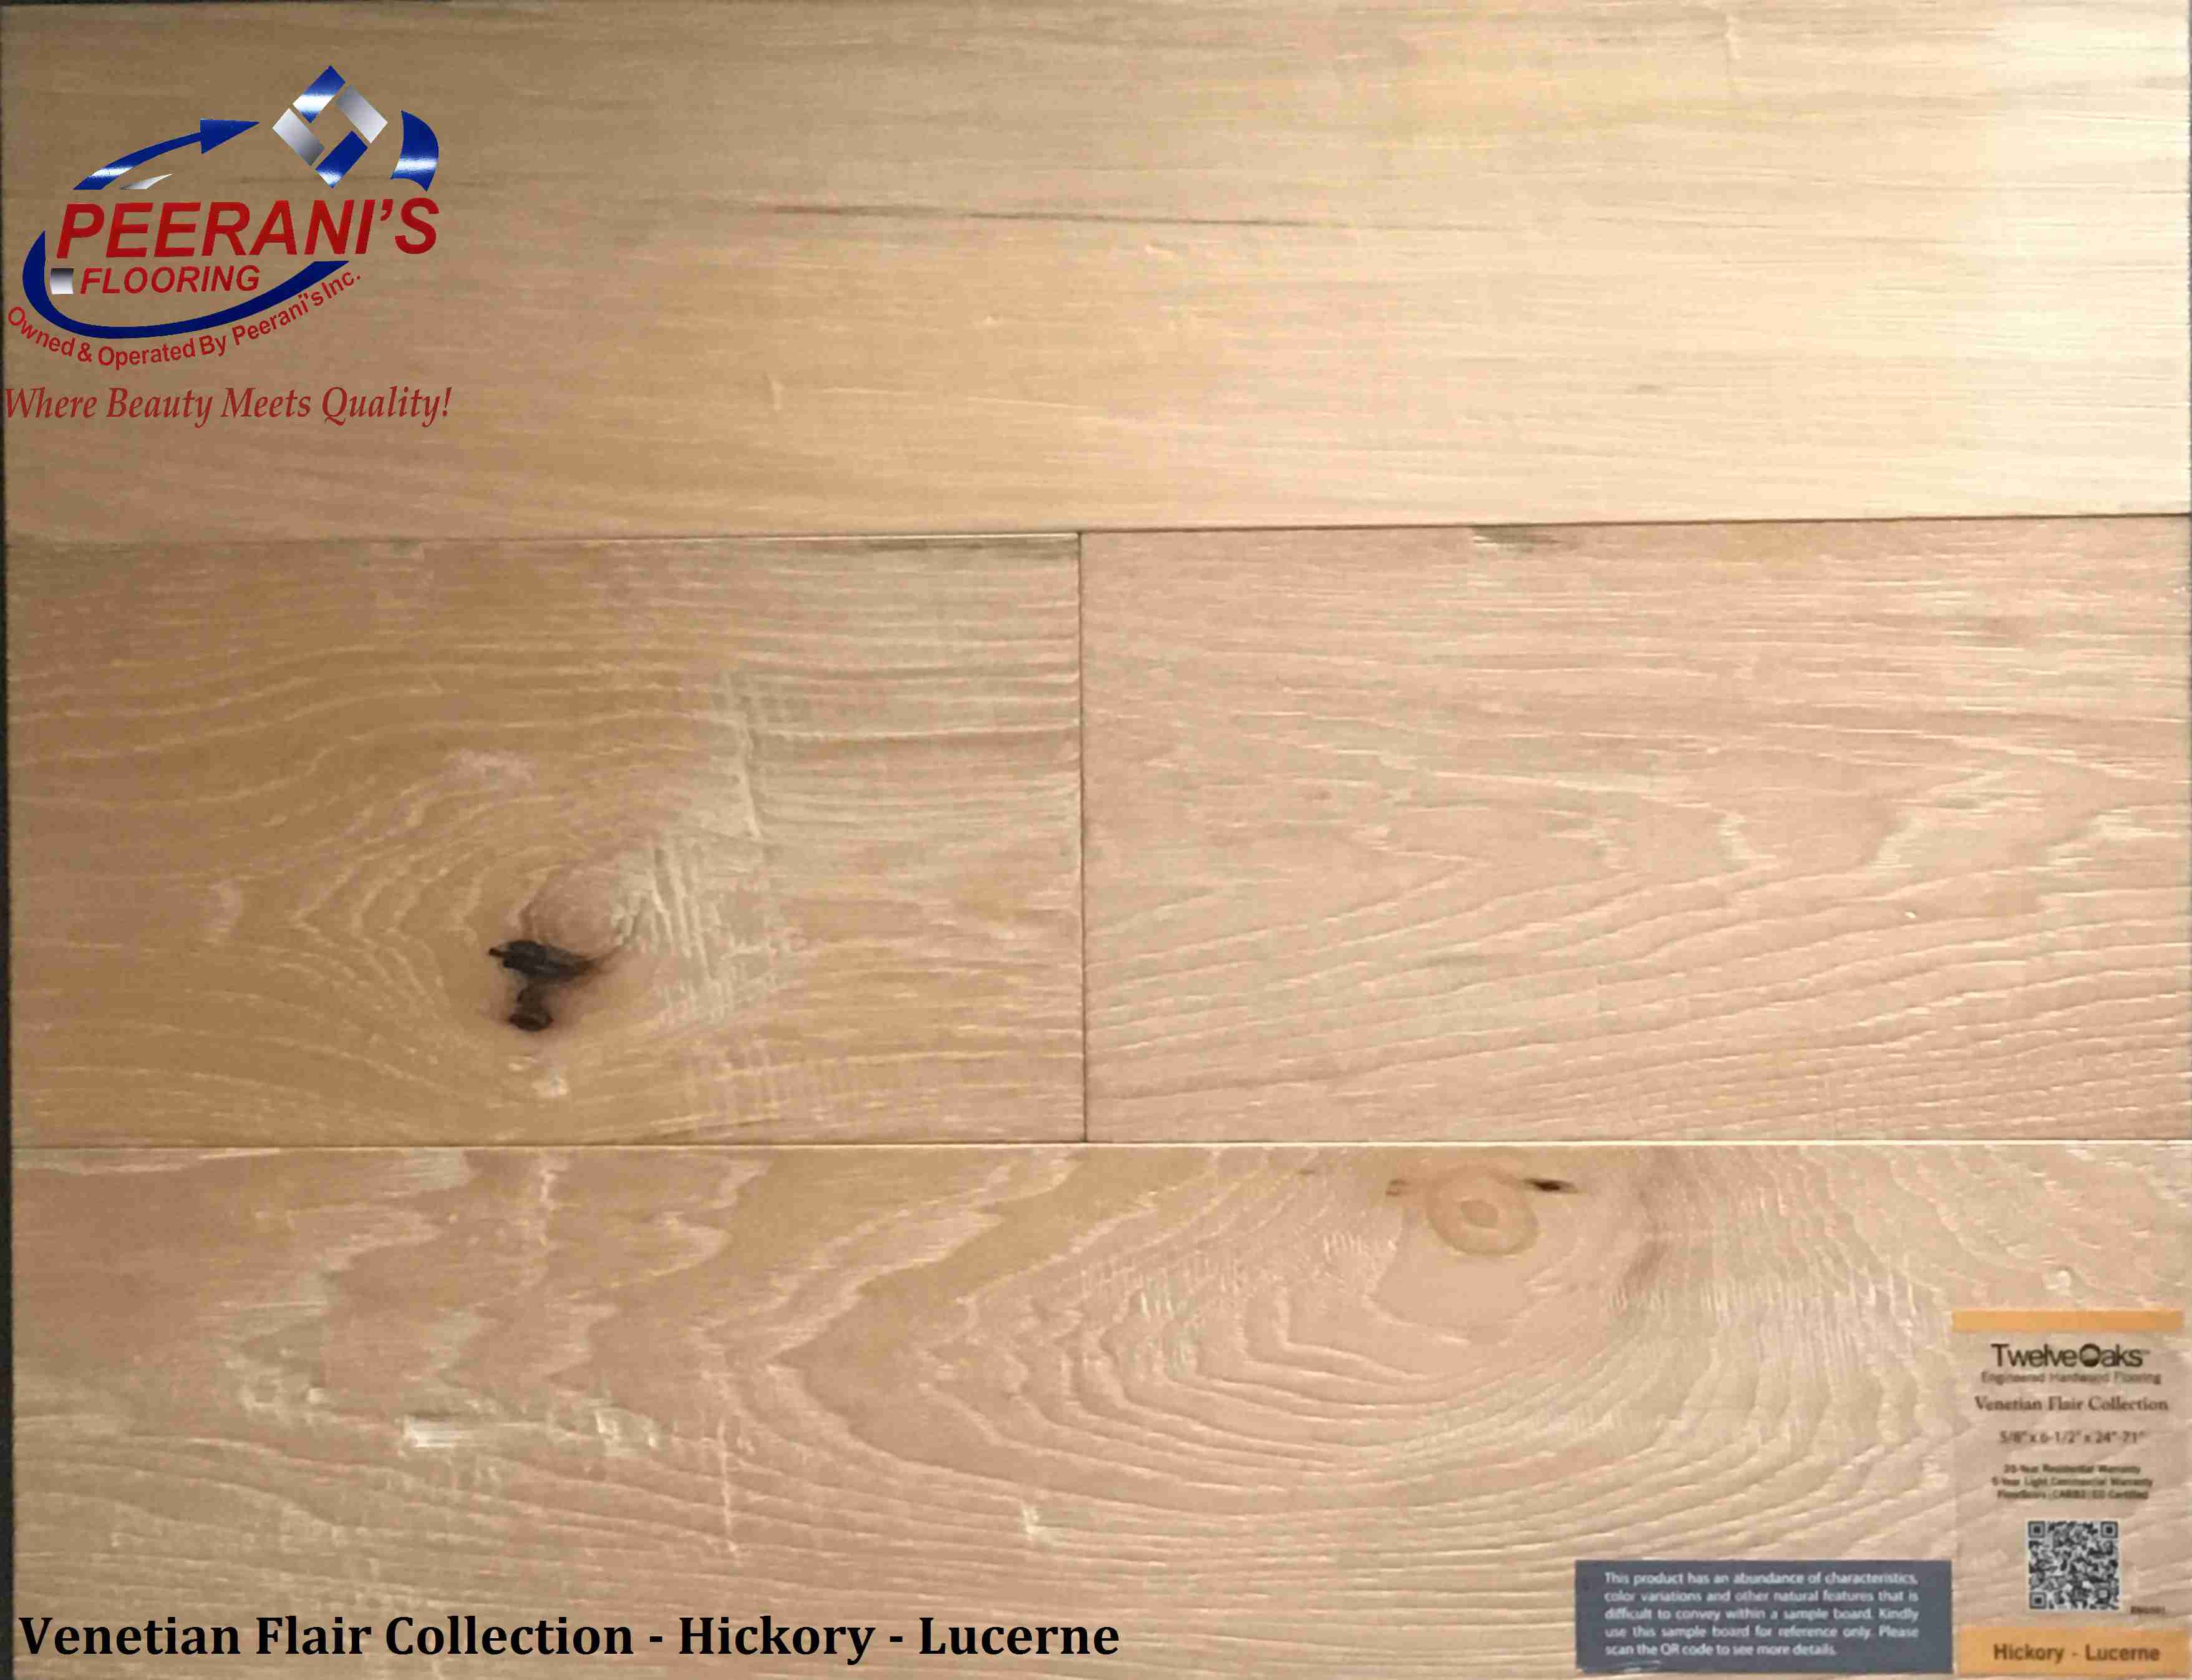 25 attractive Hardwood Floor Refinishing Mississauga 2024 free download hardwood floor refinishing mississauga of twelve oaks archives page 3 of 4 peeranis in venetian flair hickory lucerne